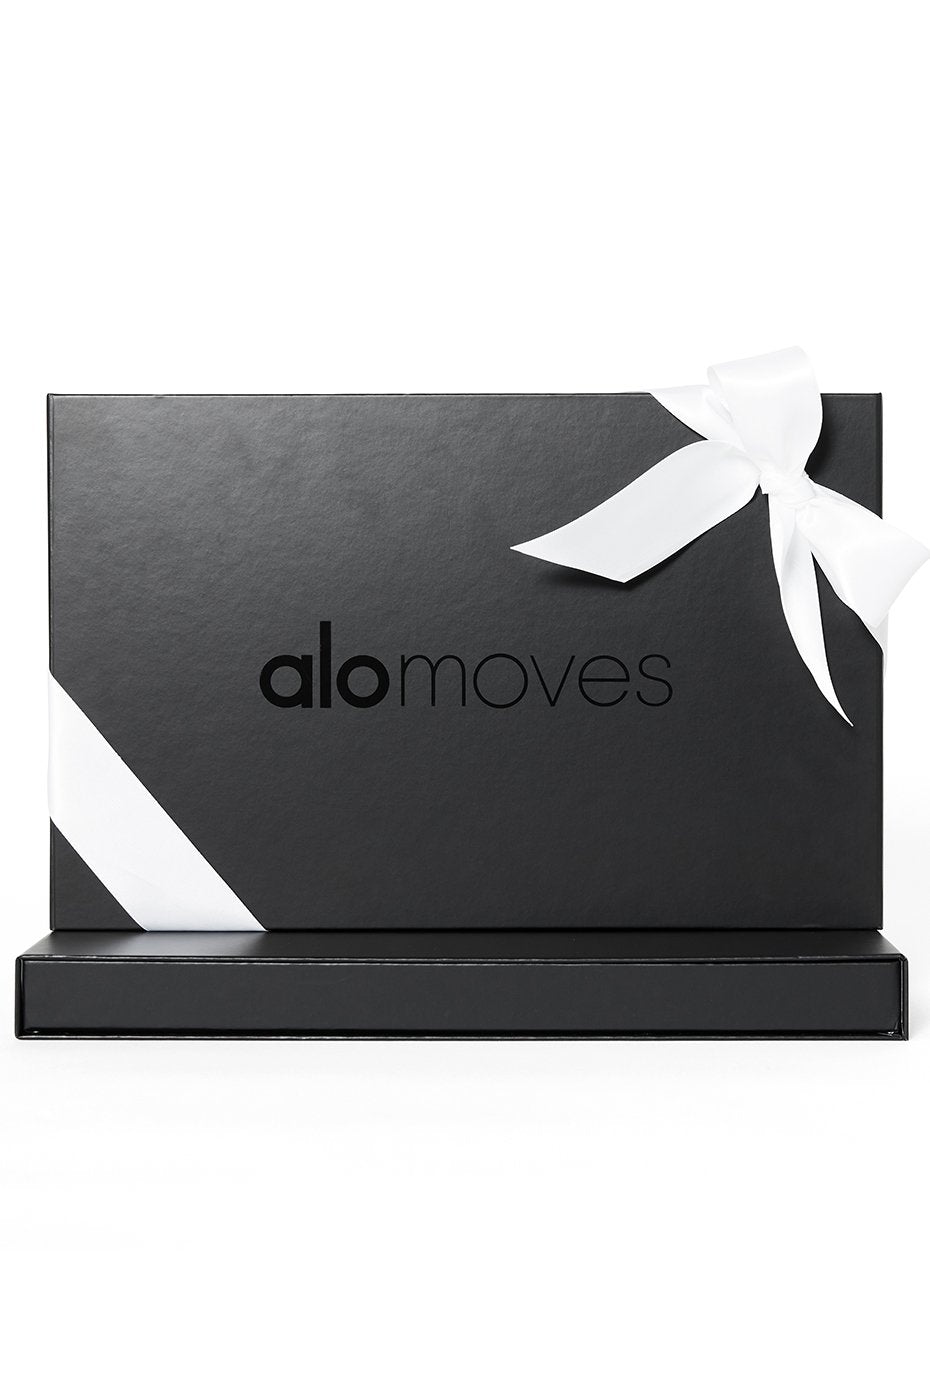 Alo Moves Annual Membership Gift Box